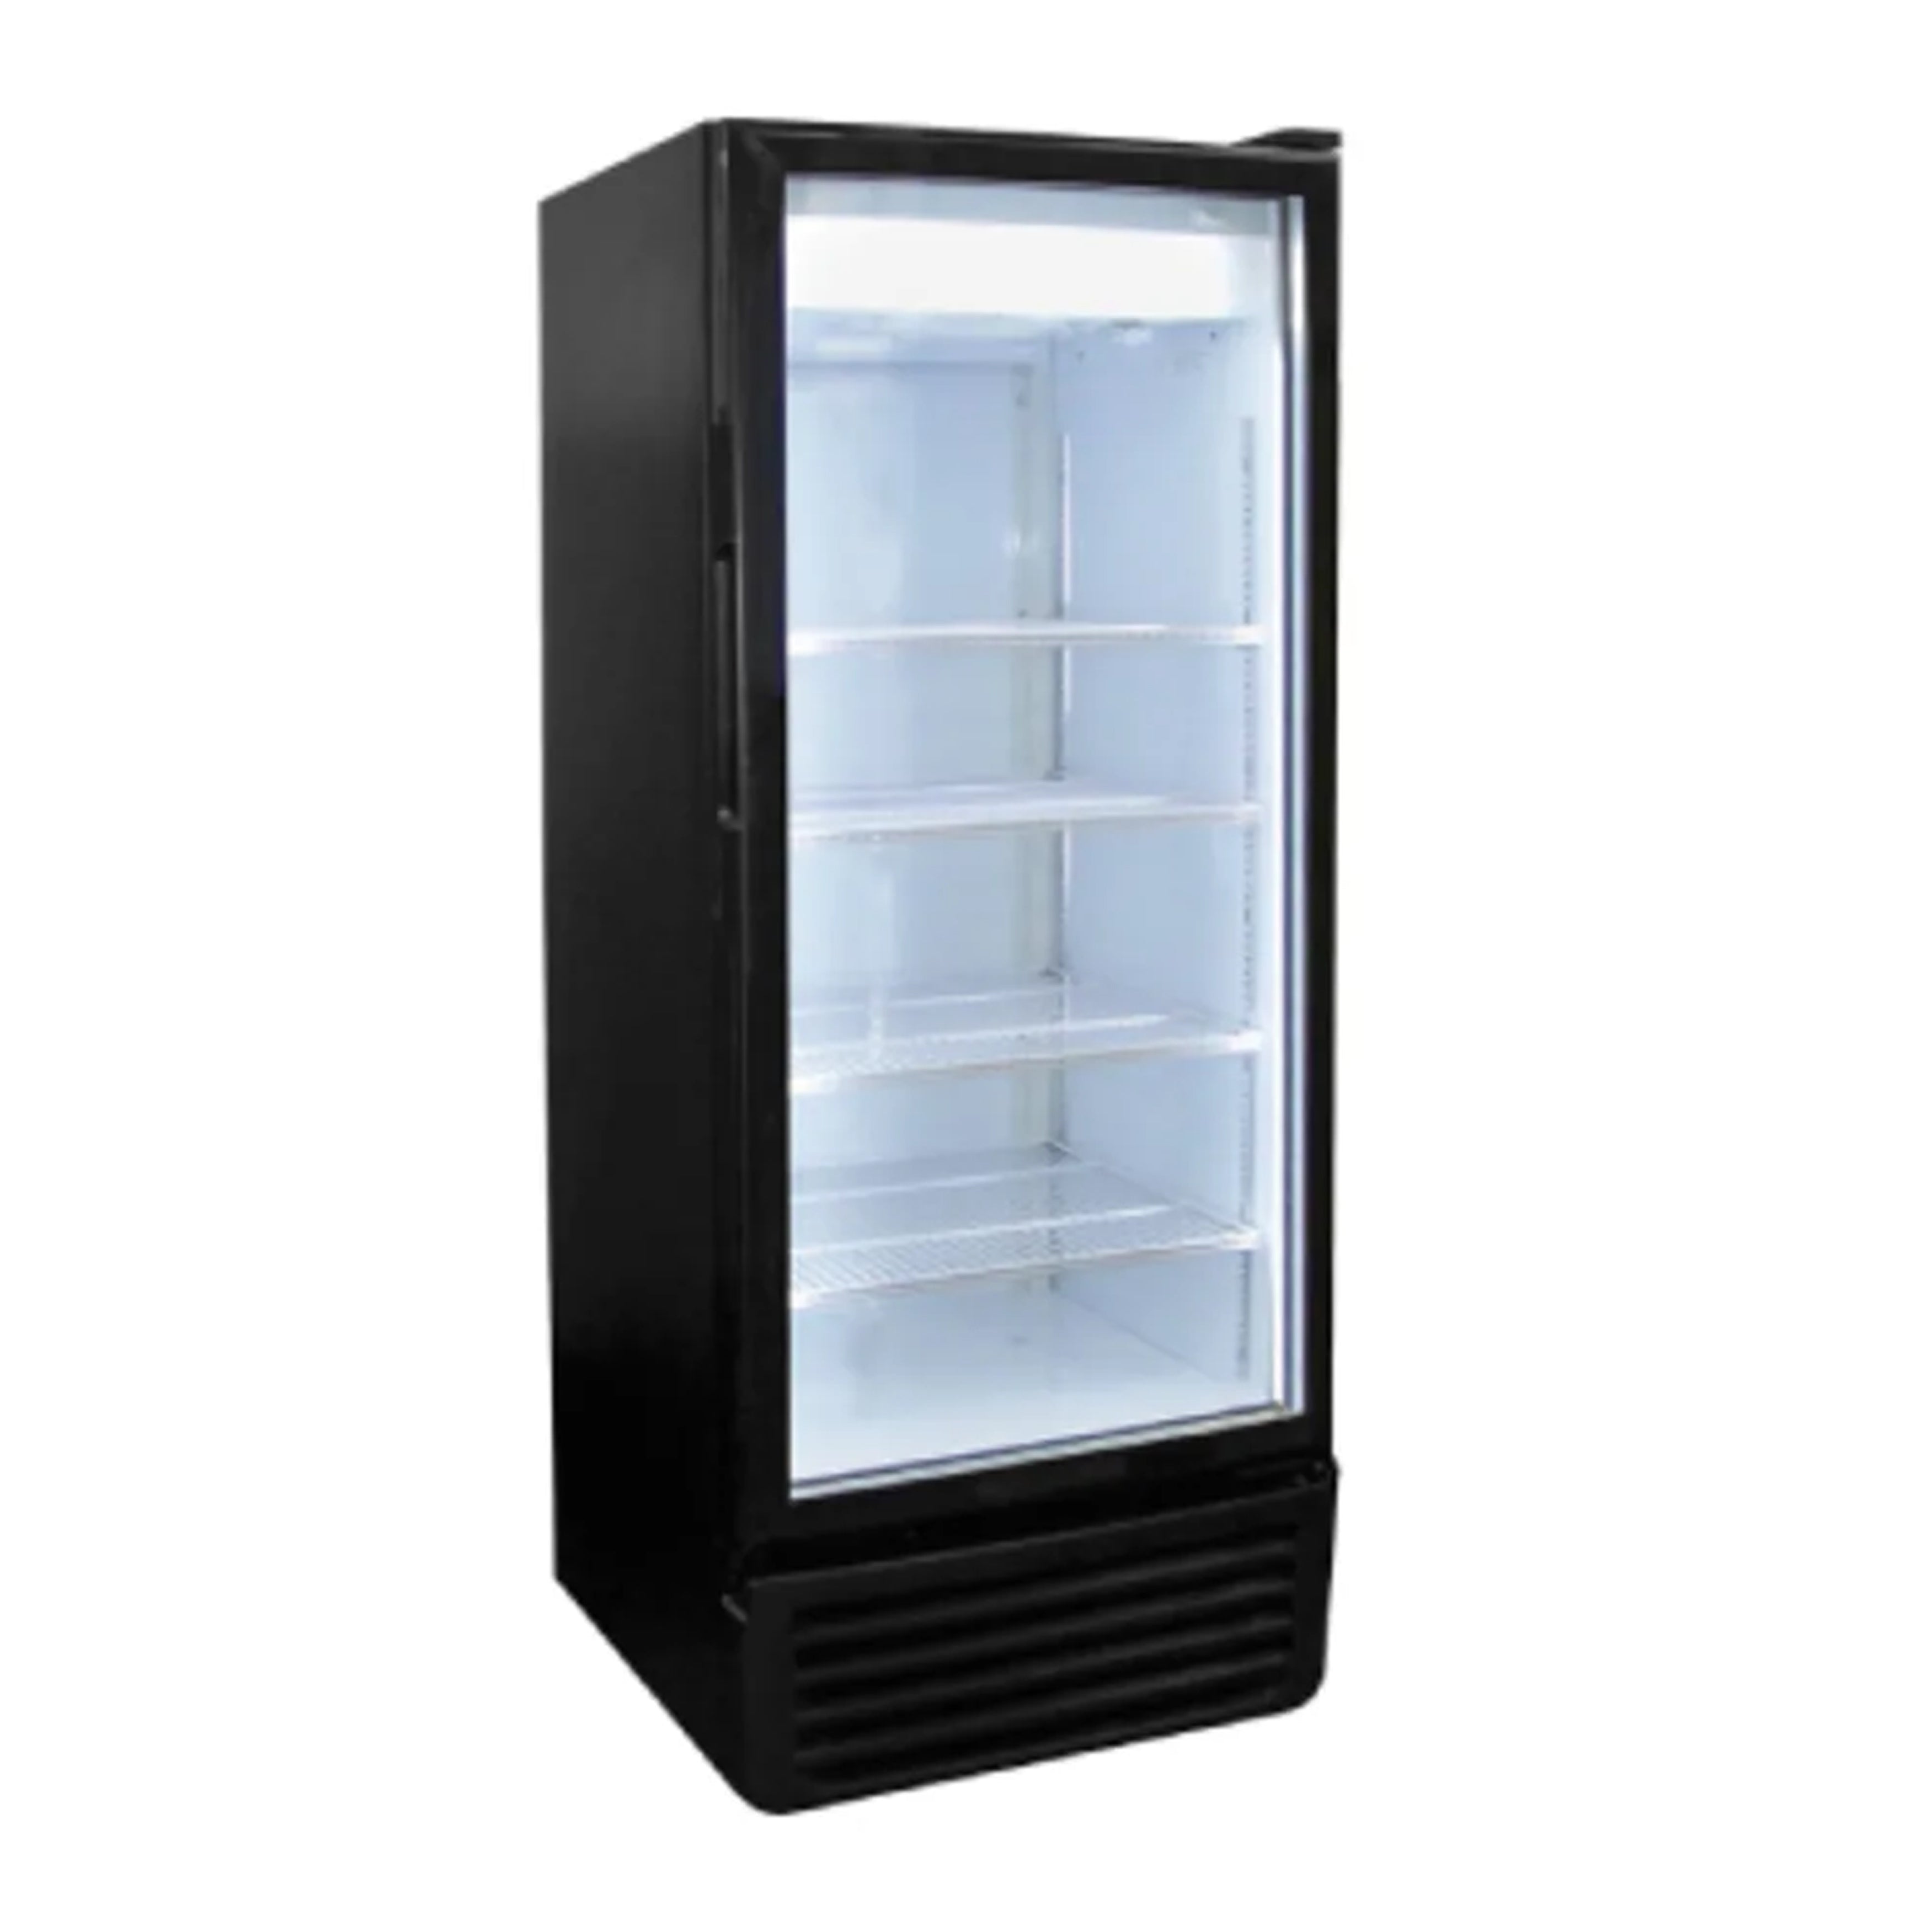 Excellence Industries - GDR-12HC, 25" Commercial 1 Glass Door Merchandiser Refrigerator 12 cu.ft.